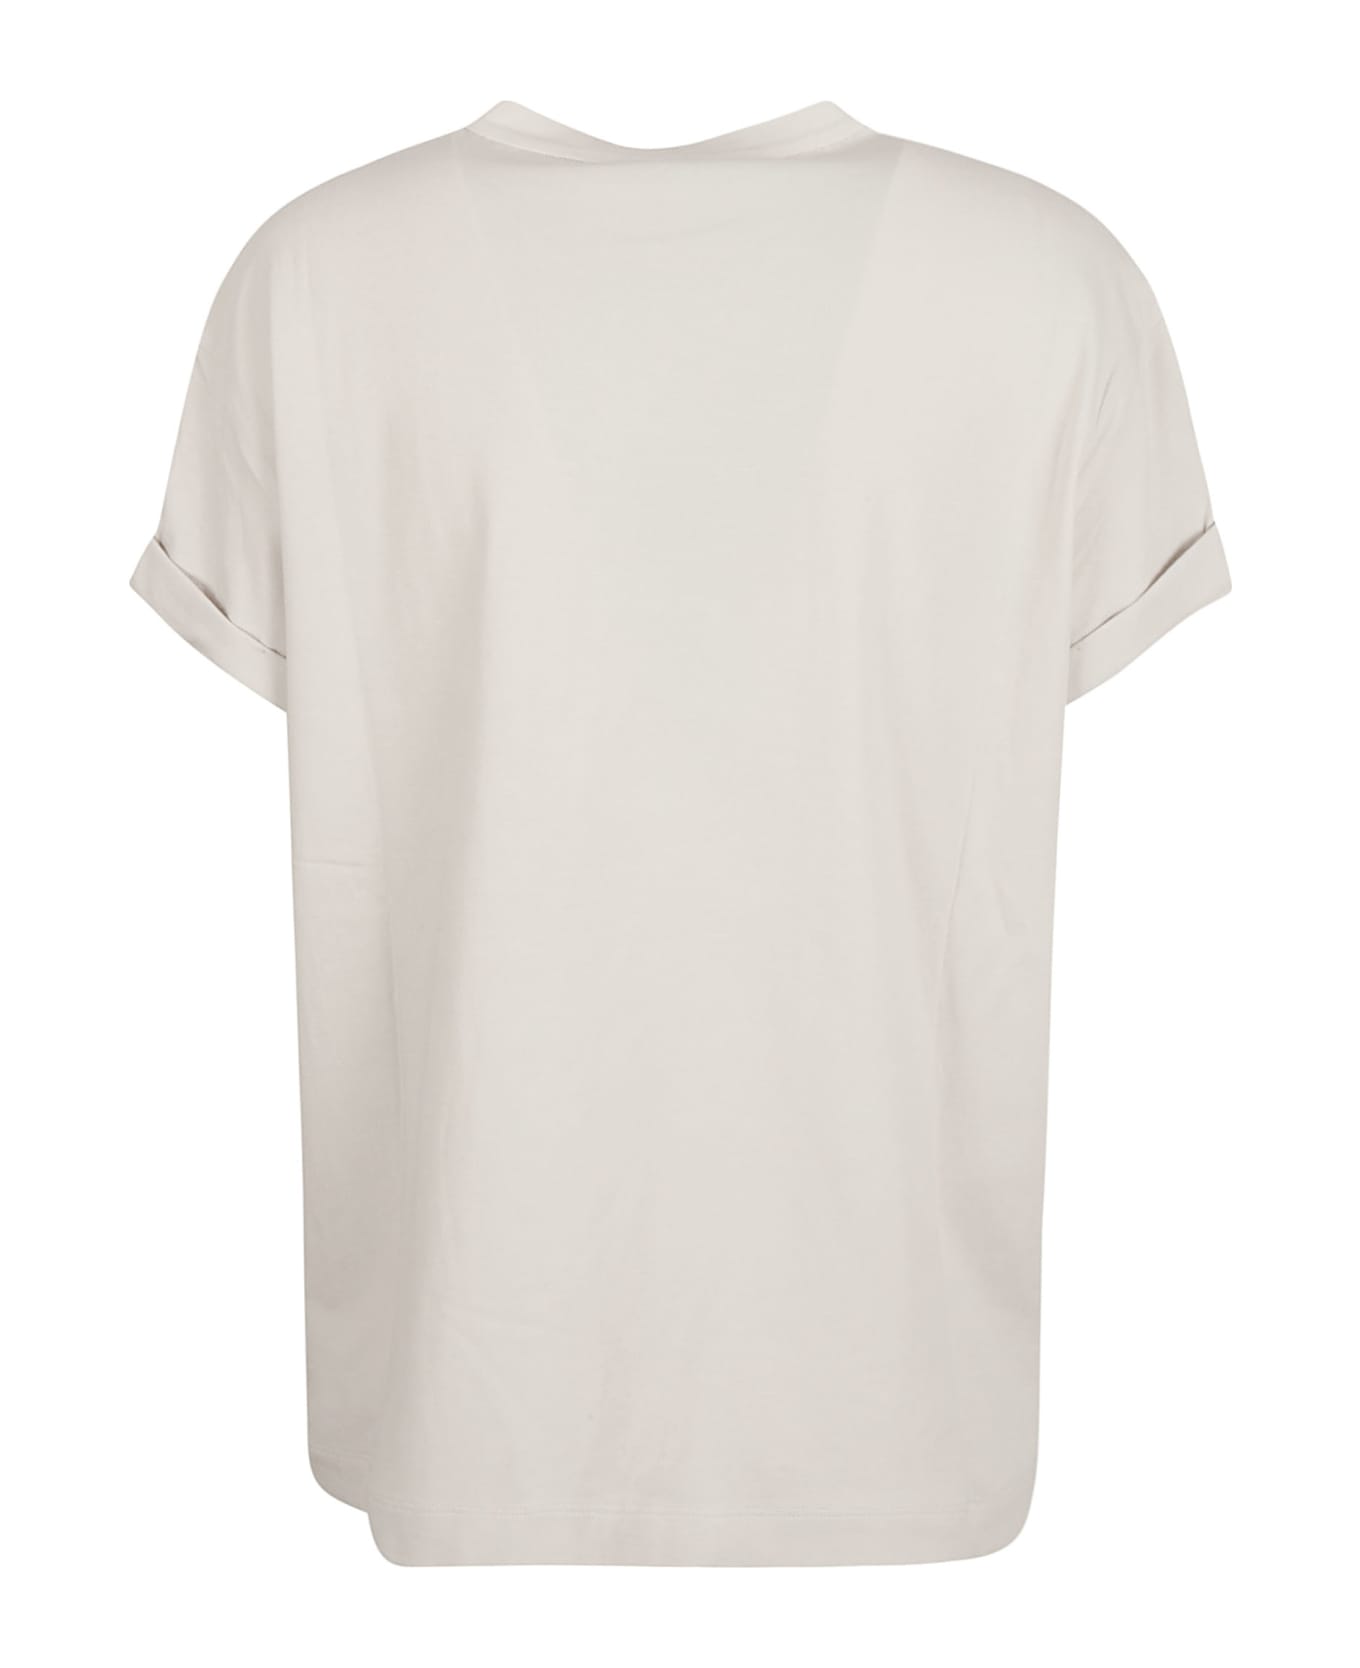 Brunello Cucinelli Patched Pocket Plain T-shirt - White Sand